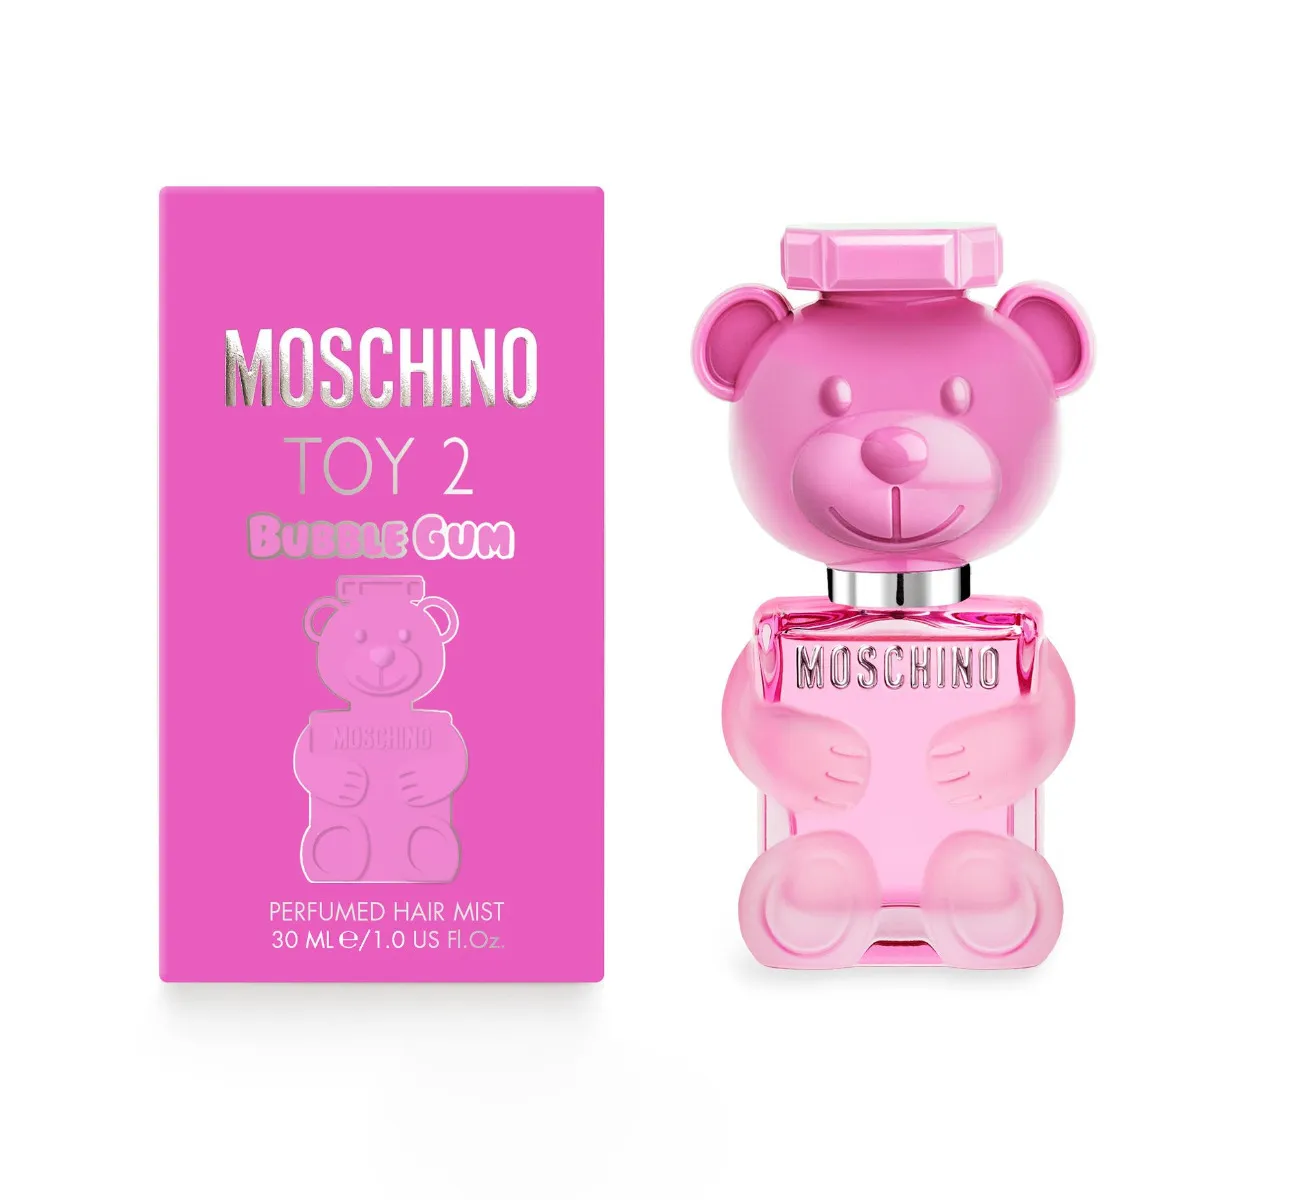 MOSCHINO Toy2 Bubble Gum Hair Mist 30 ml